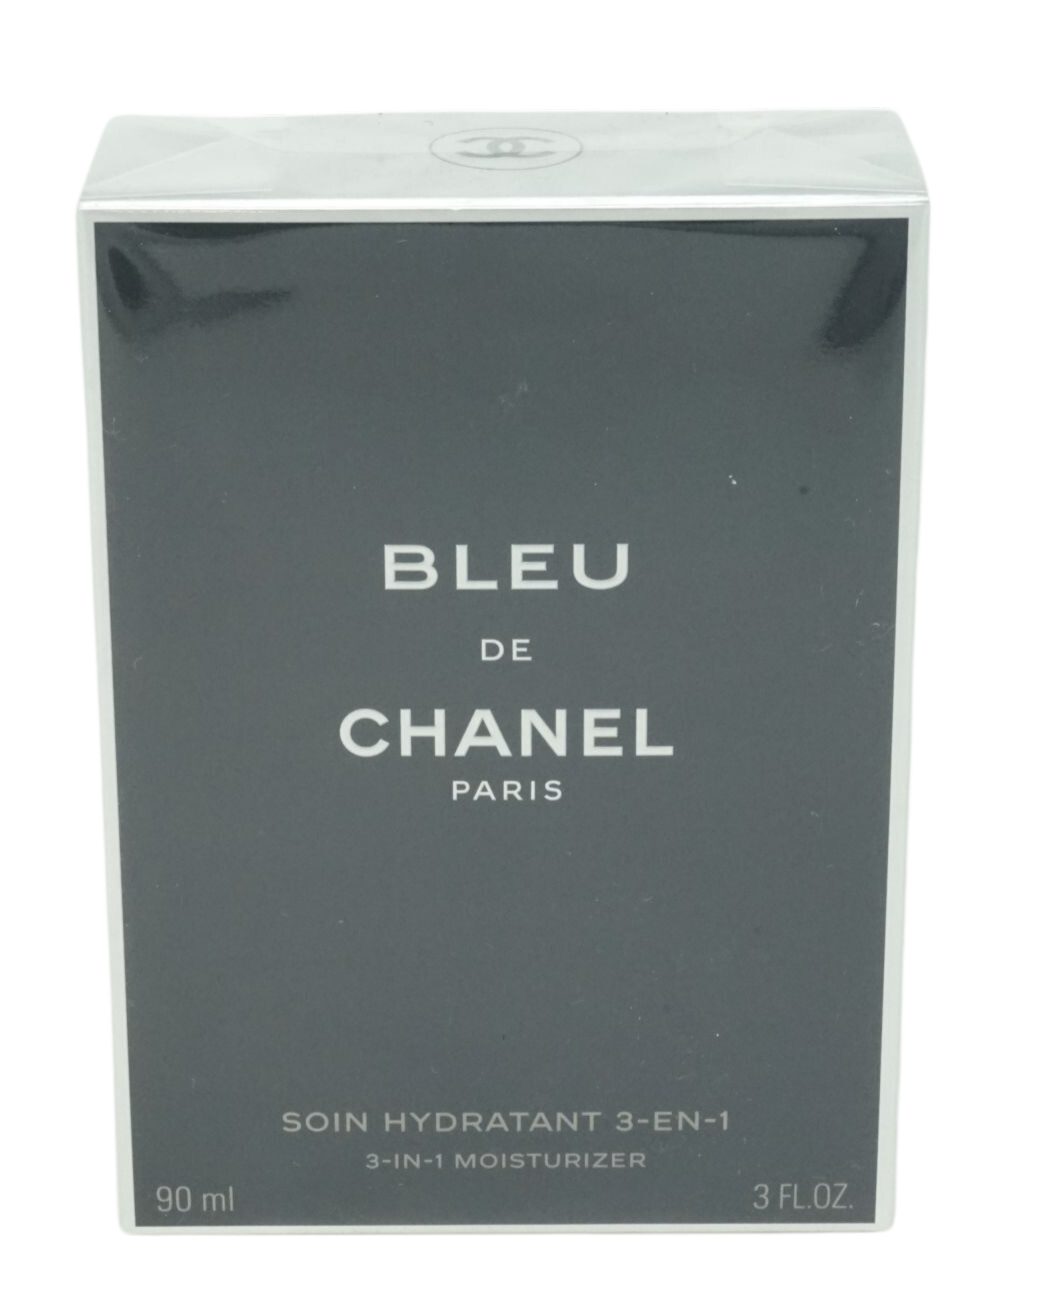 3 Moisturizer Lotion CHANEL Selbstbräunungstücher 1 / in 90ml de Chanel Bleu Chanel